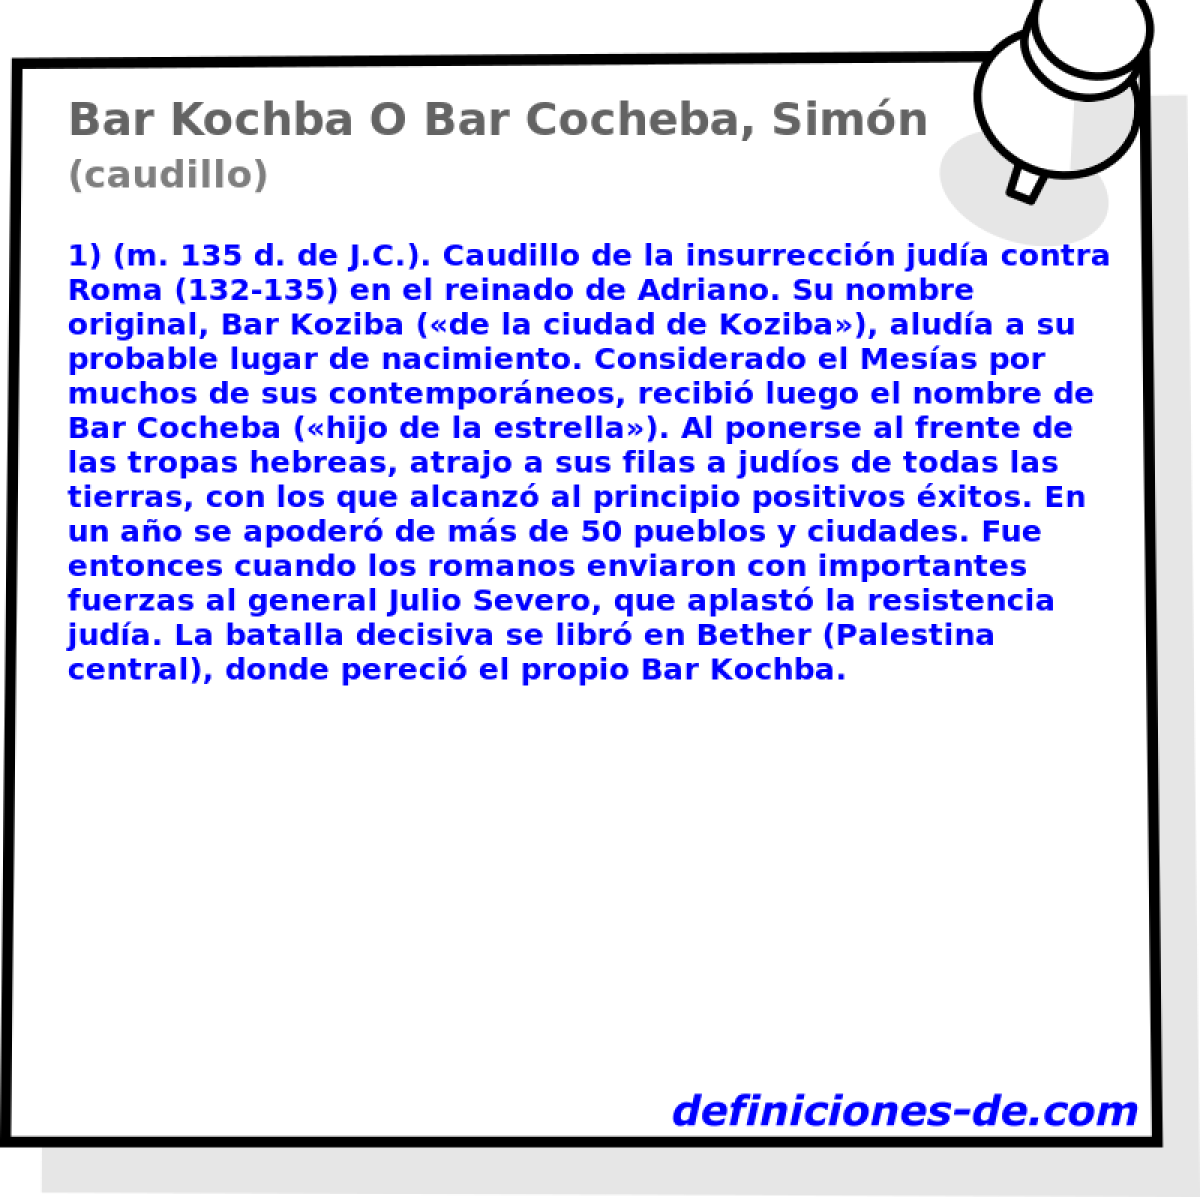 Bar Kochba O Bar Cocheba, Simn (caudillo)